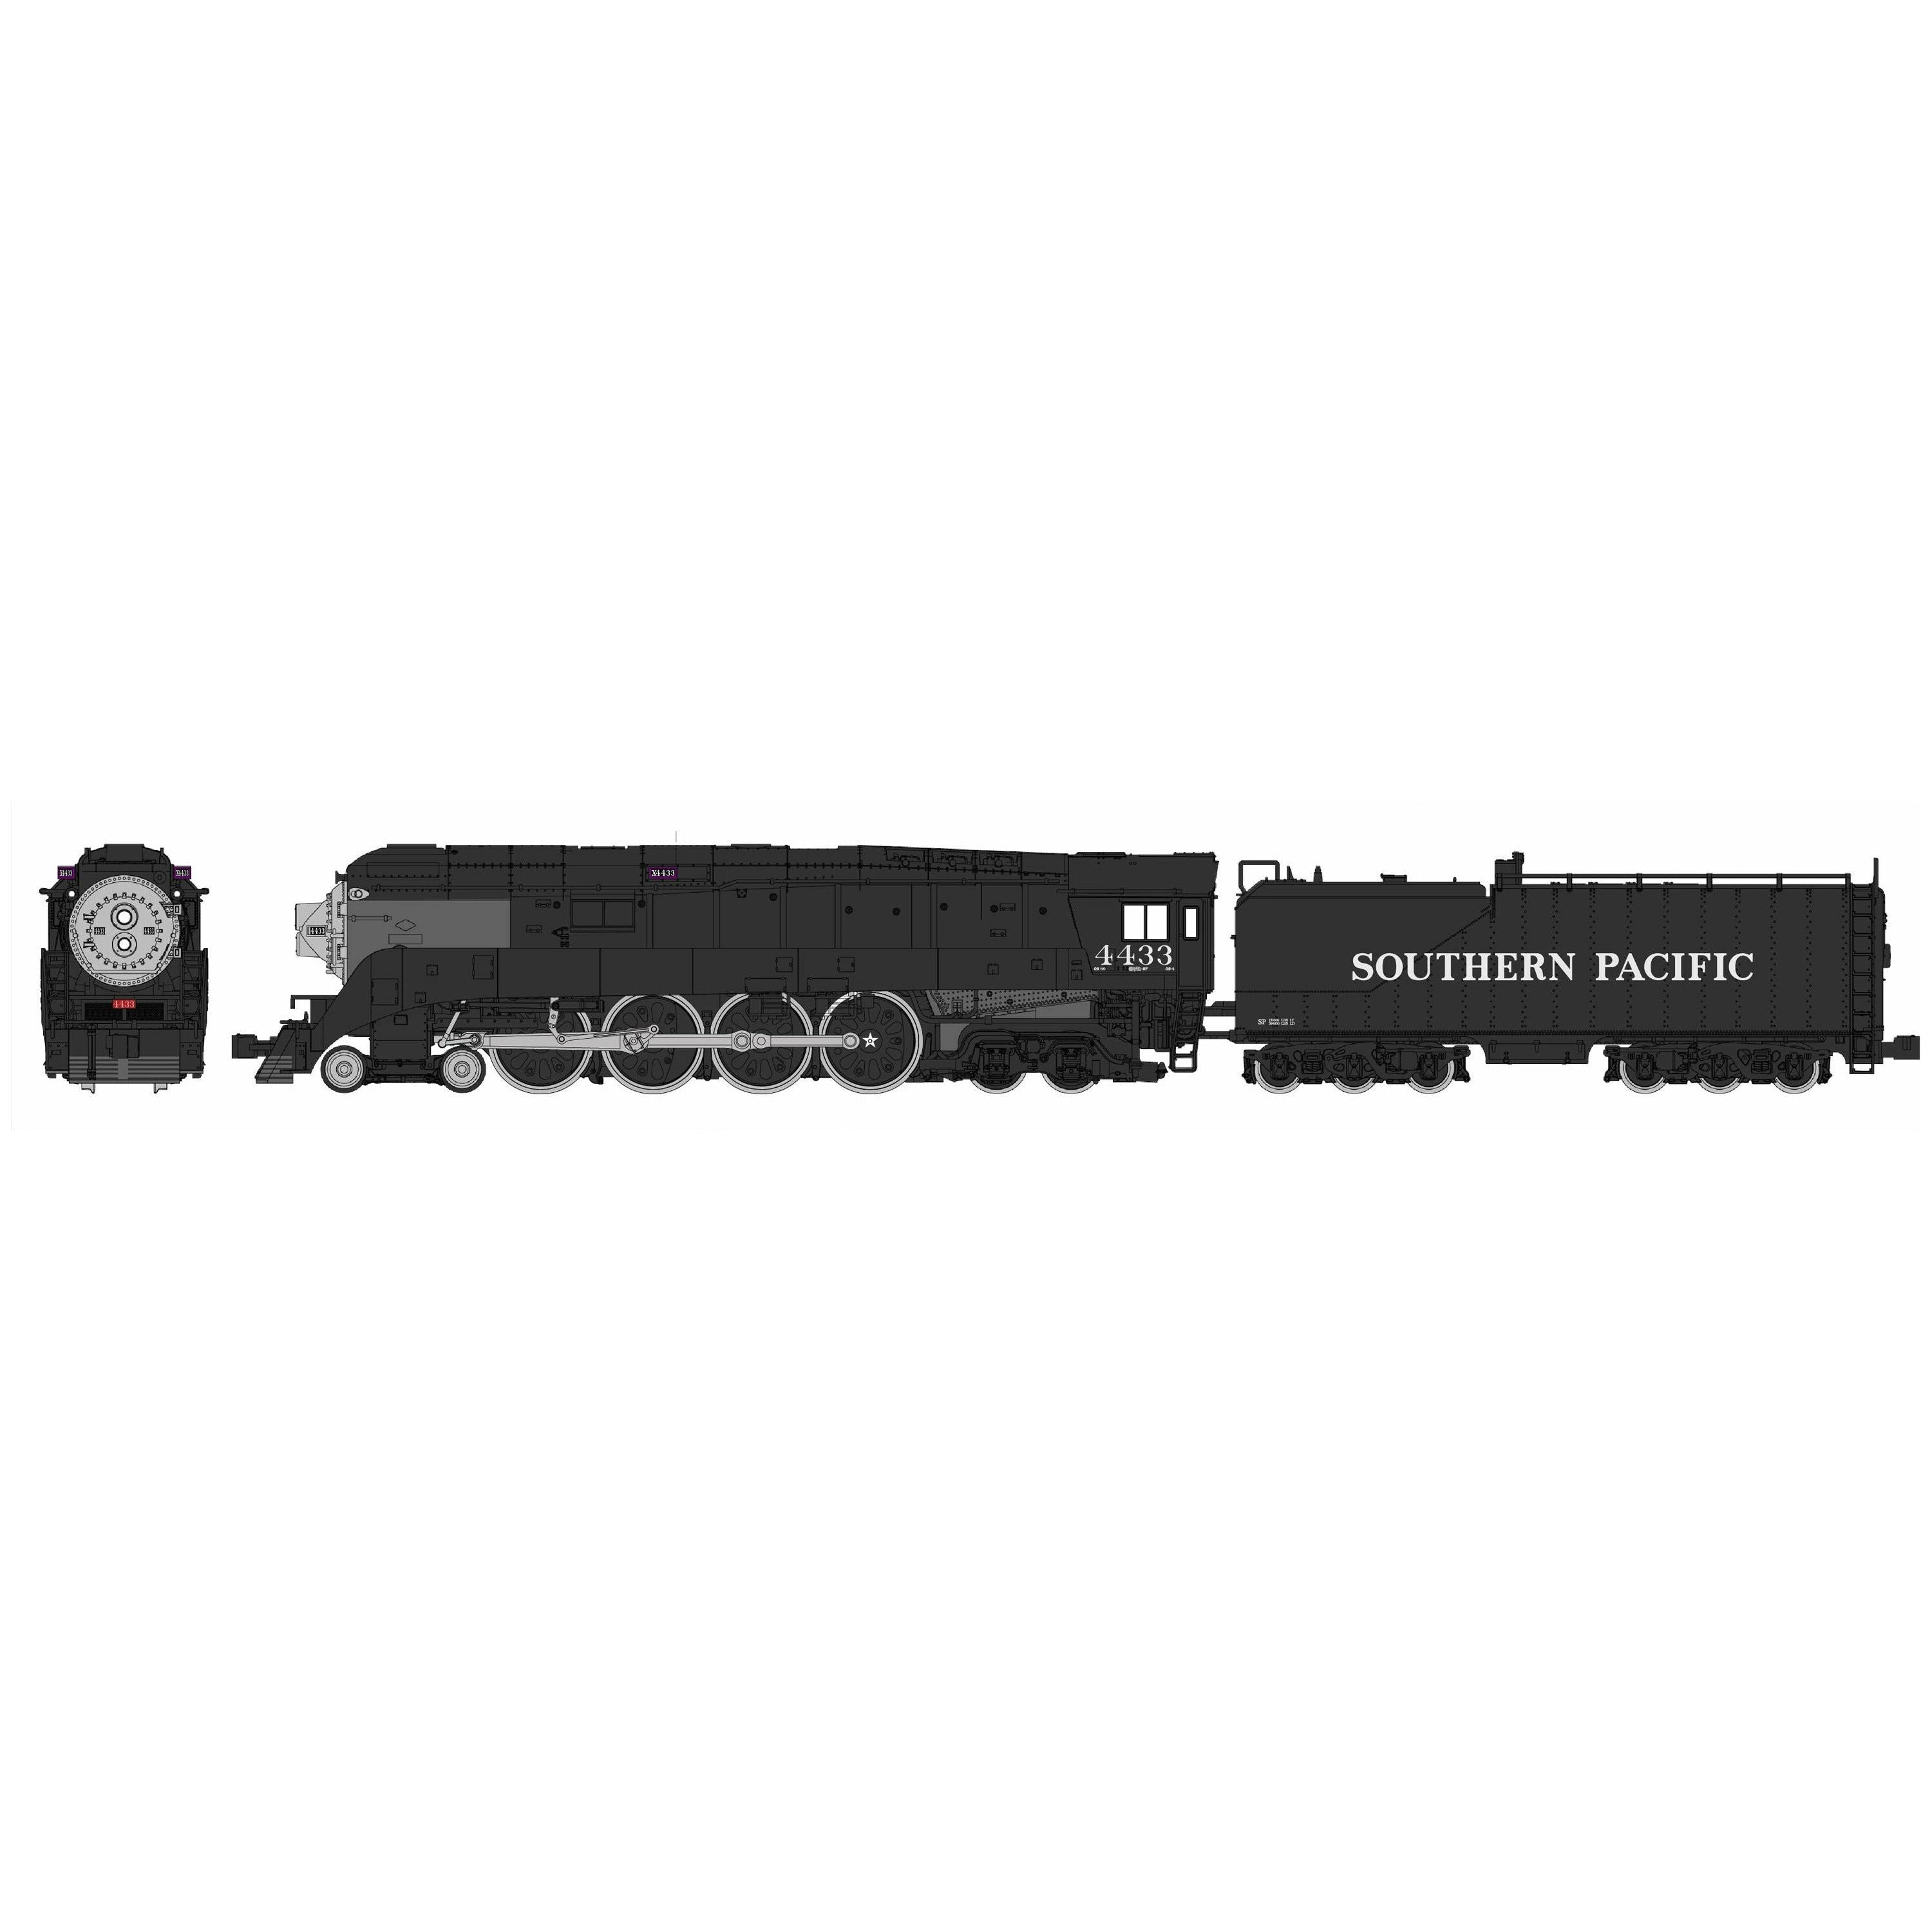 Kato, 1 26-0308-DCC, N, GS-4 4-8-4 Steam Locomotive, Southern Pacific - Postwar Black, #4433, DCC Installed